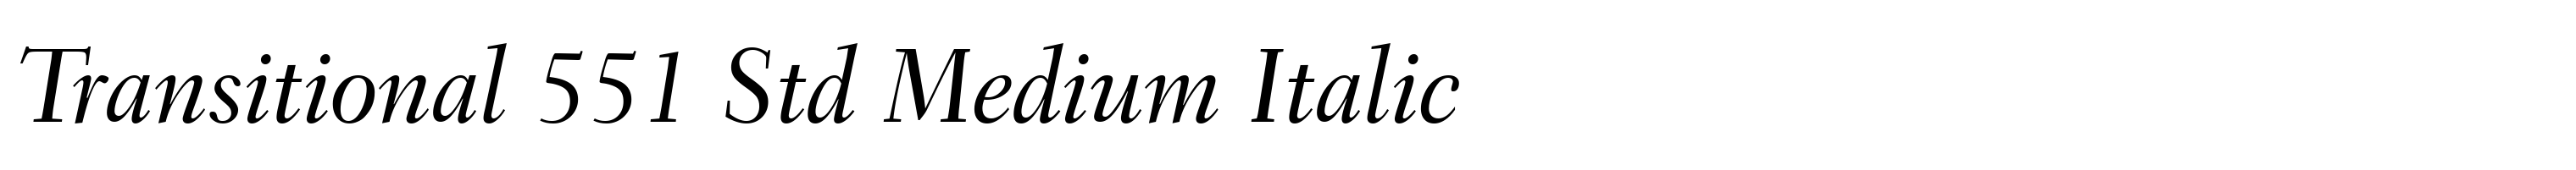 Transitional 551 Std Medium Italic